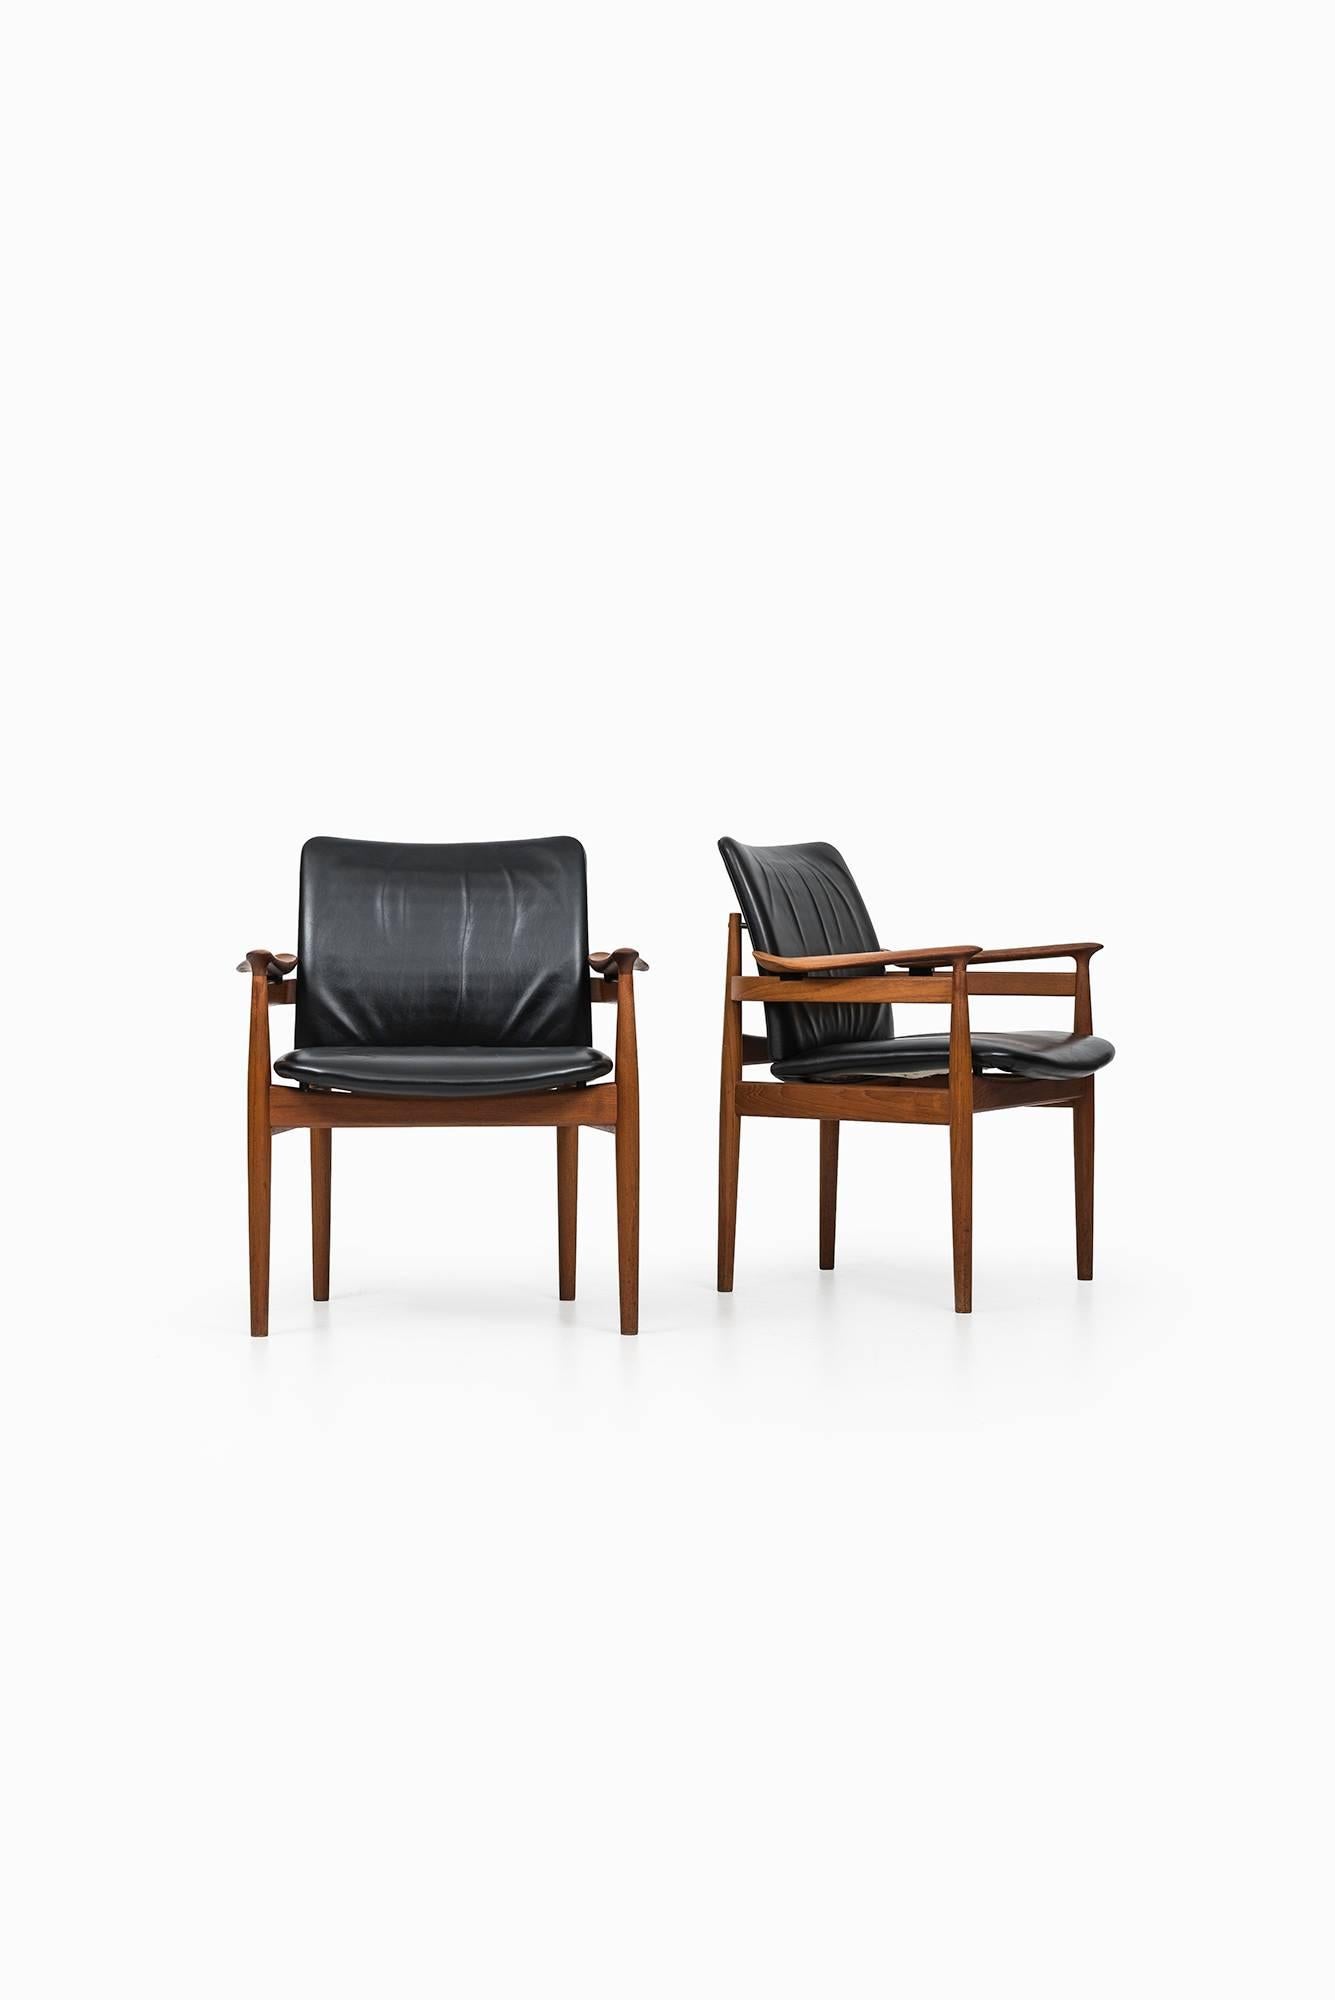 Rare set of ten armchairs model 192 designed by Finn Juhl. Produced by France & Son in Denmark.